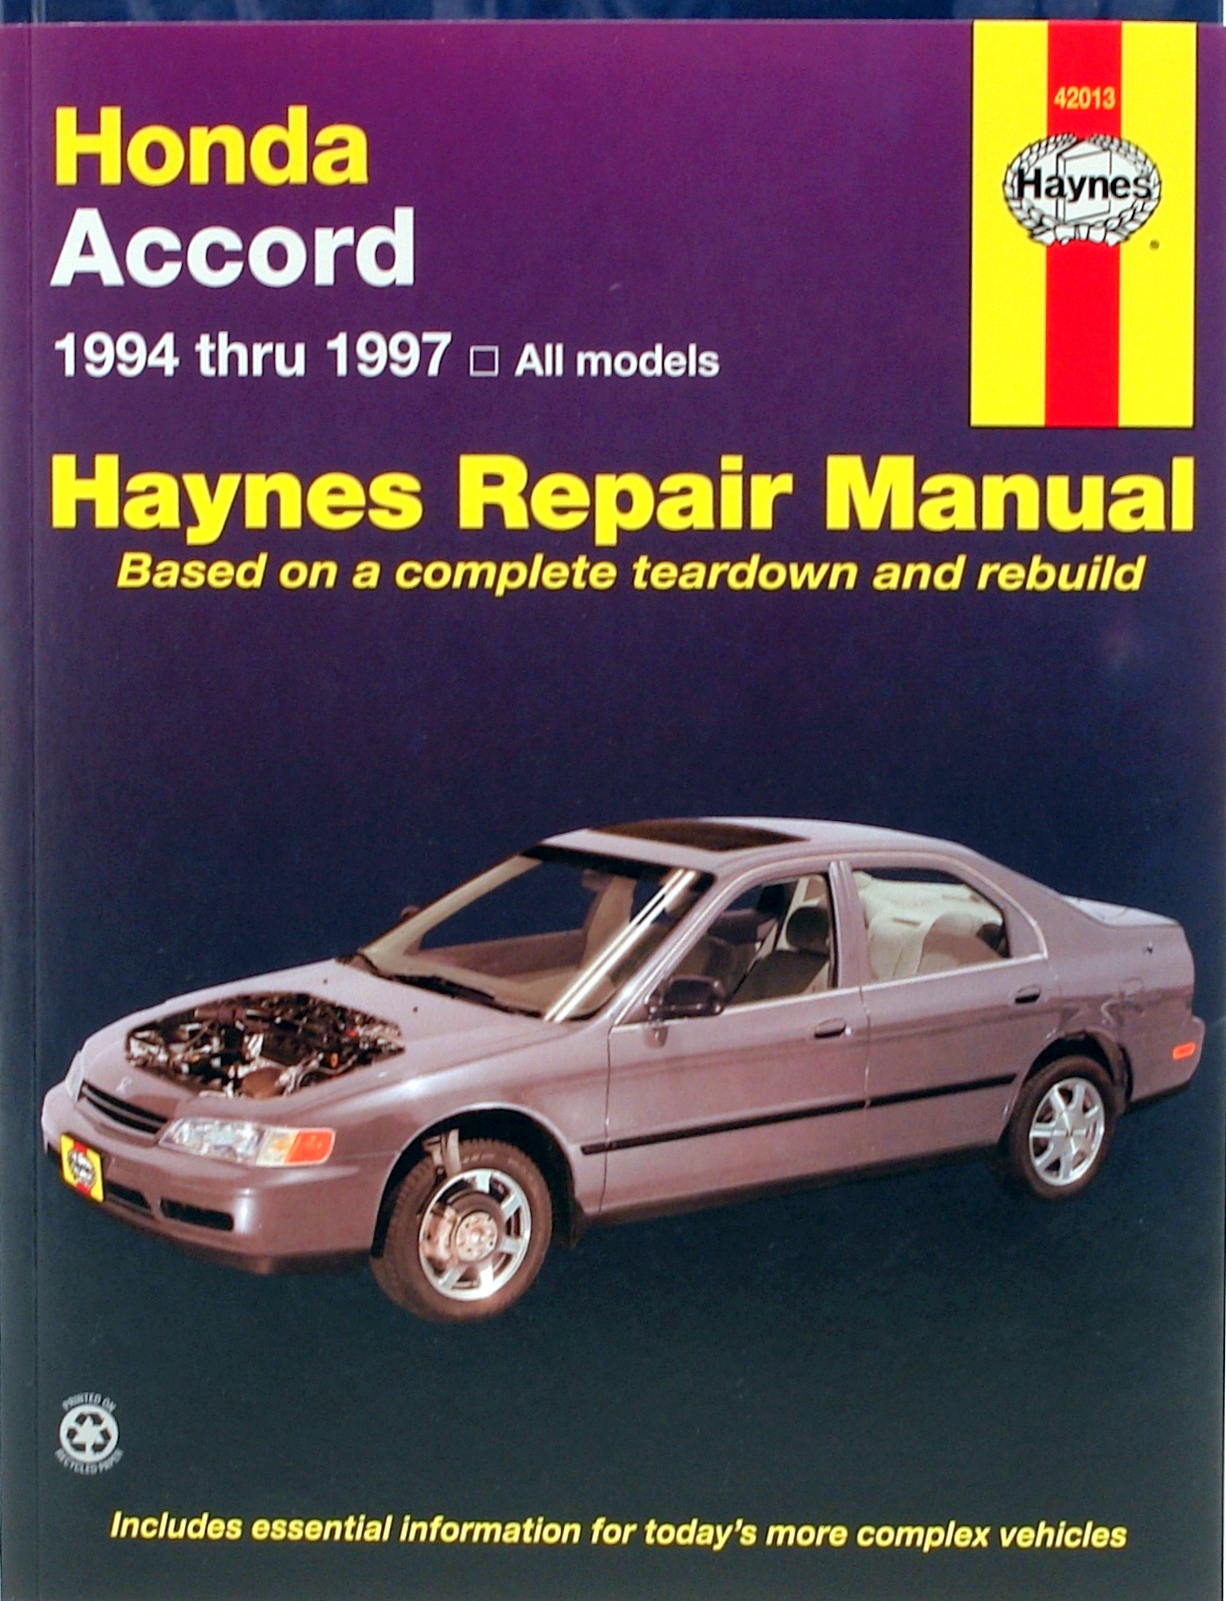 Honda 1997 CMX250C Owner Manual 97